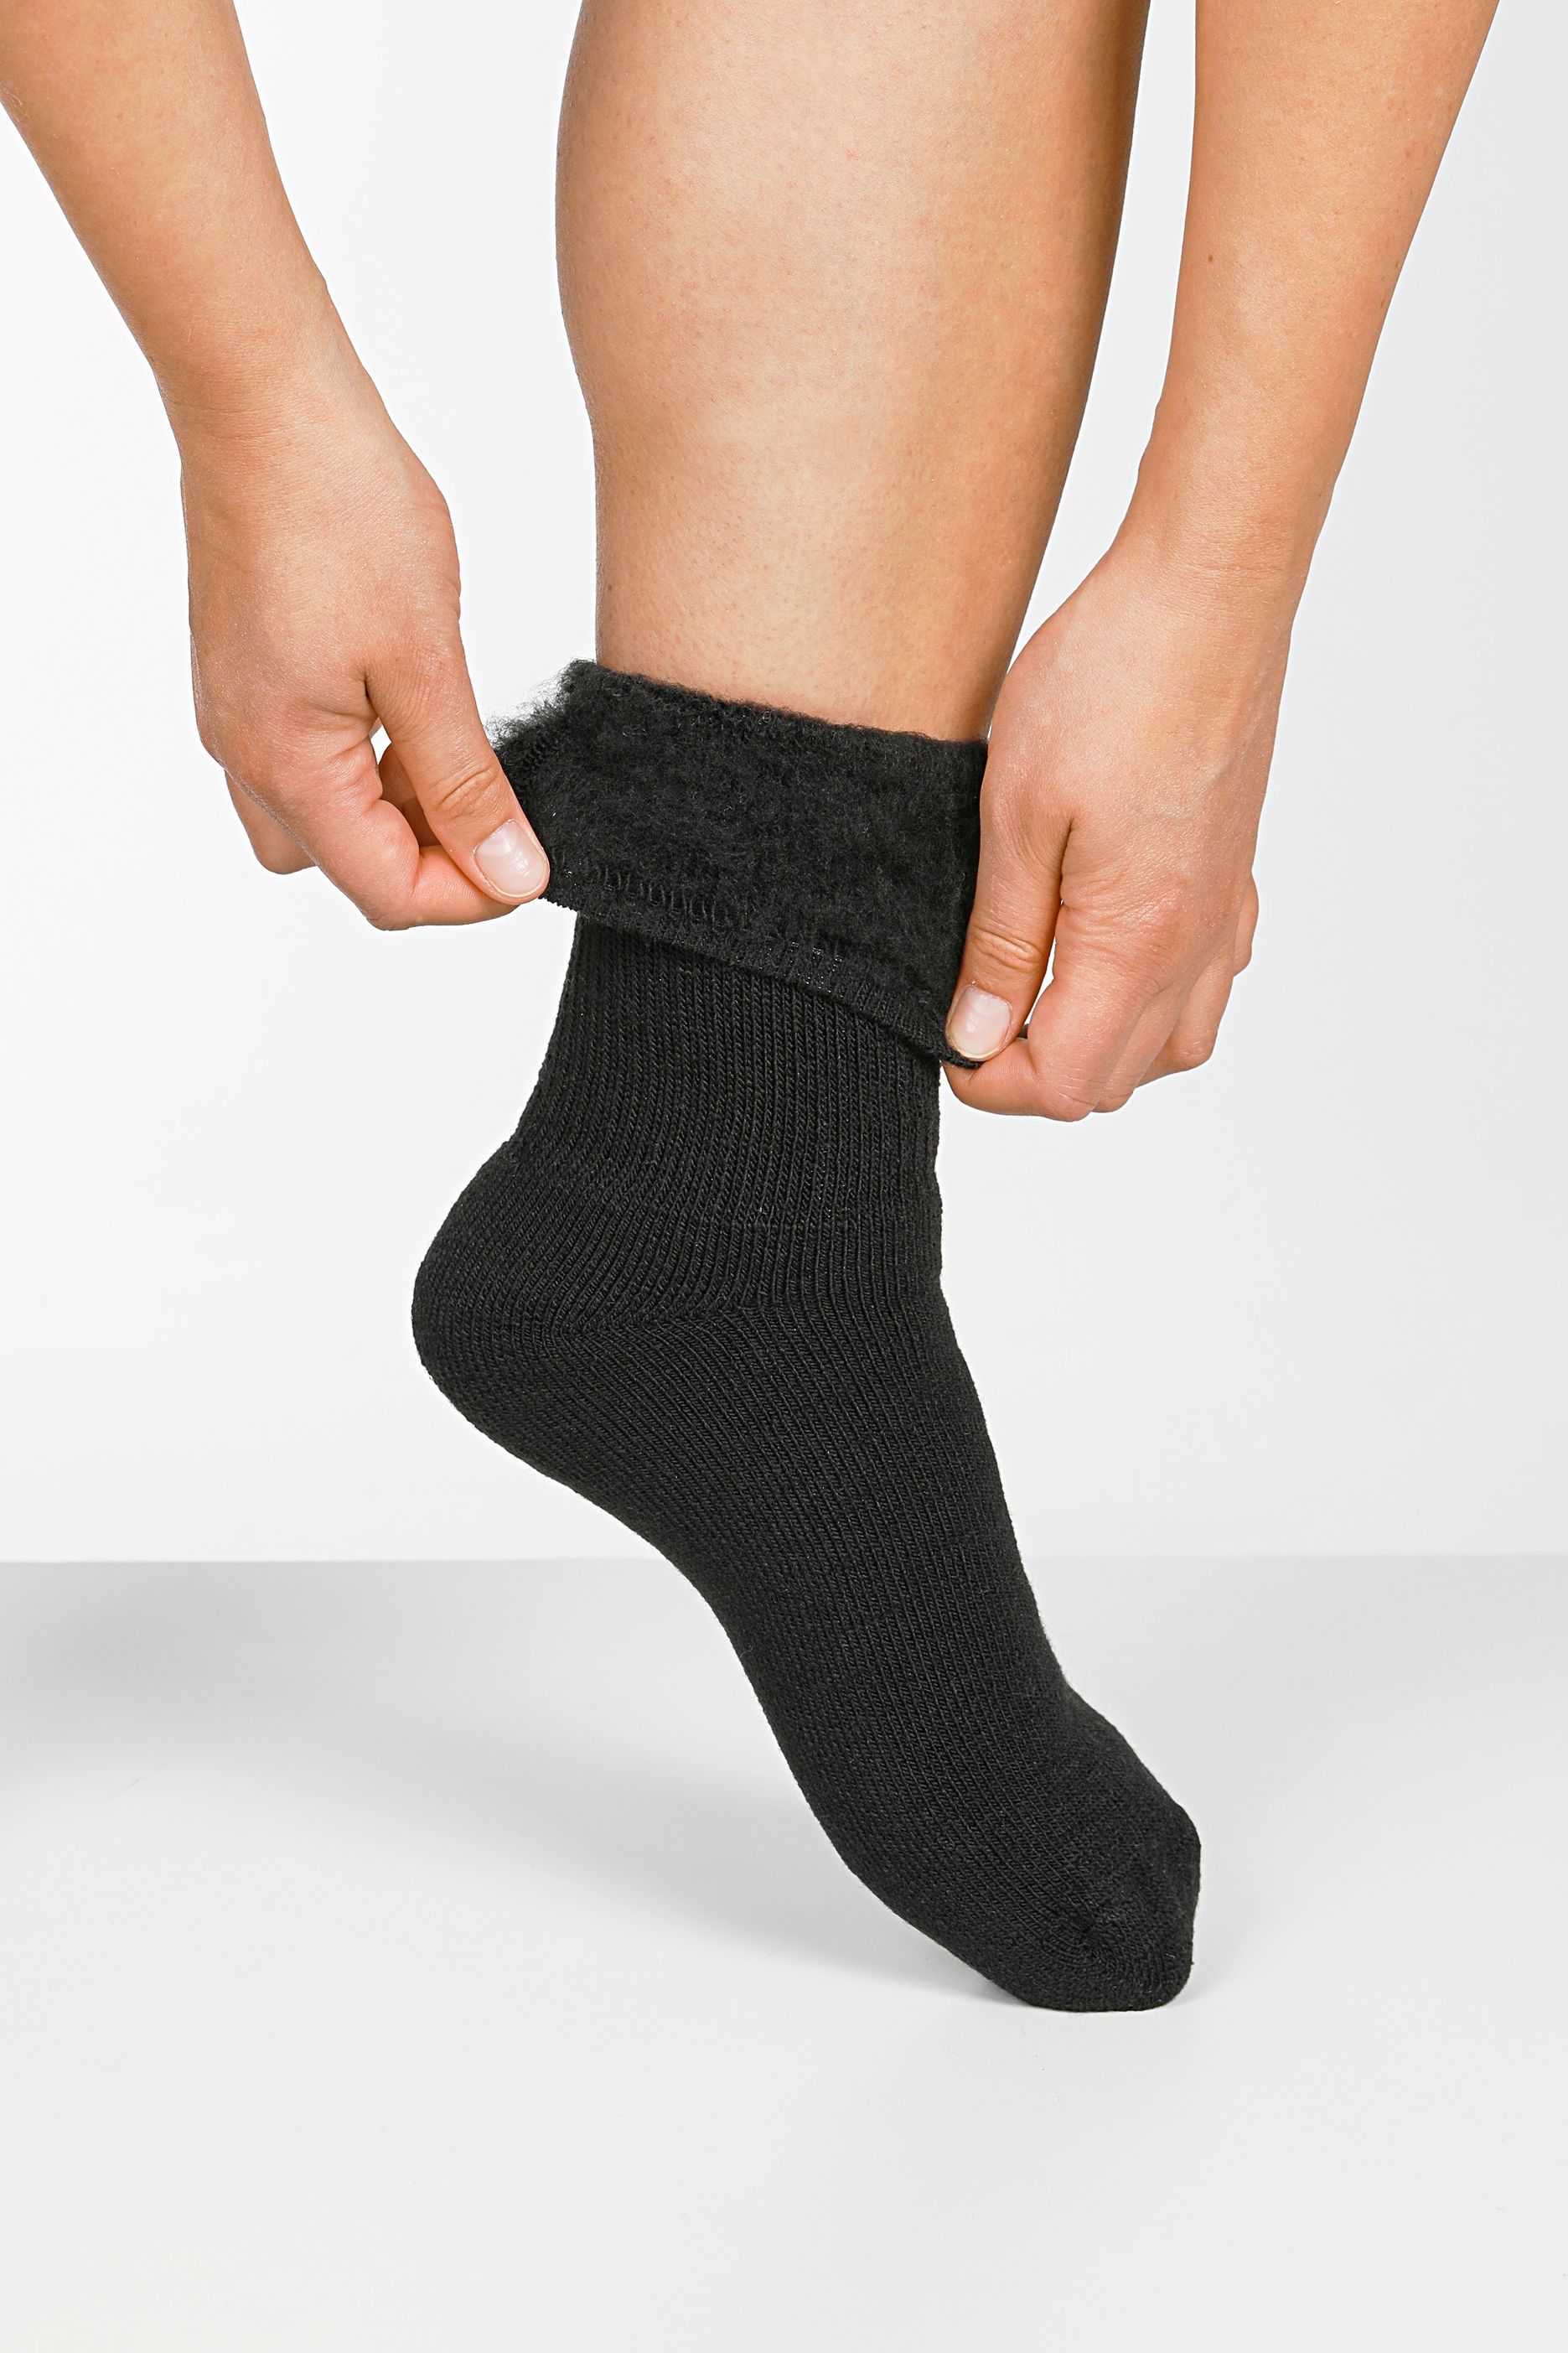 Wärmespeichernde Socken Herren, schwarz, 2 Paar, Größe: 41-45 | Weltbild.de